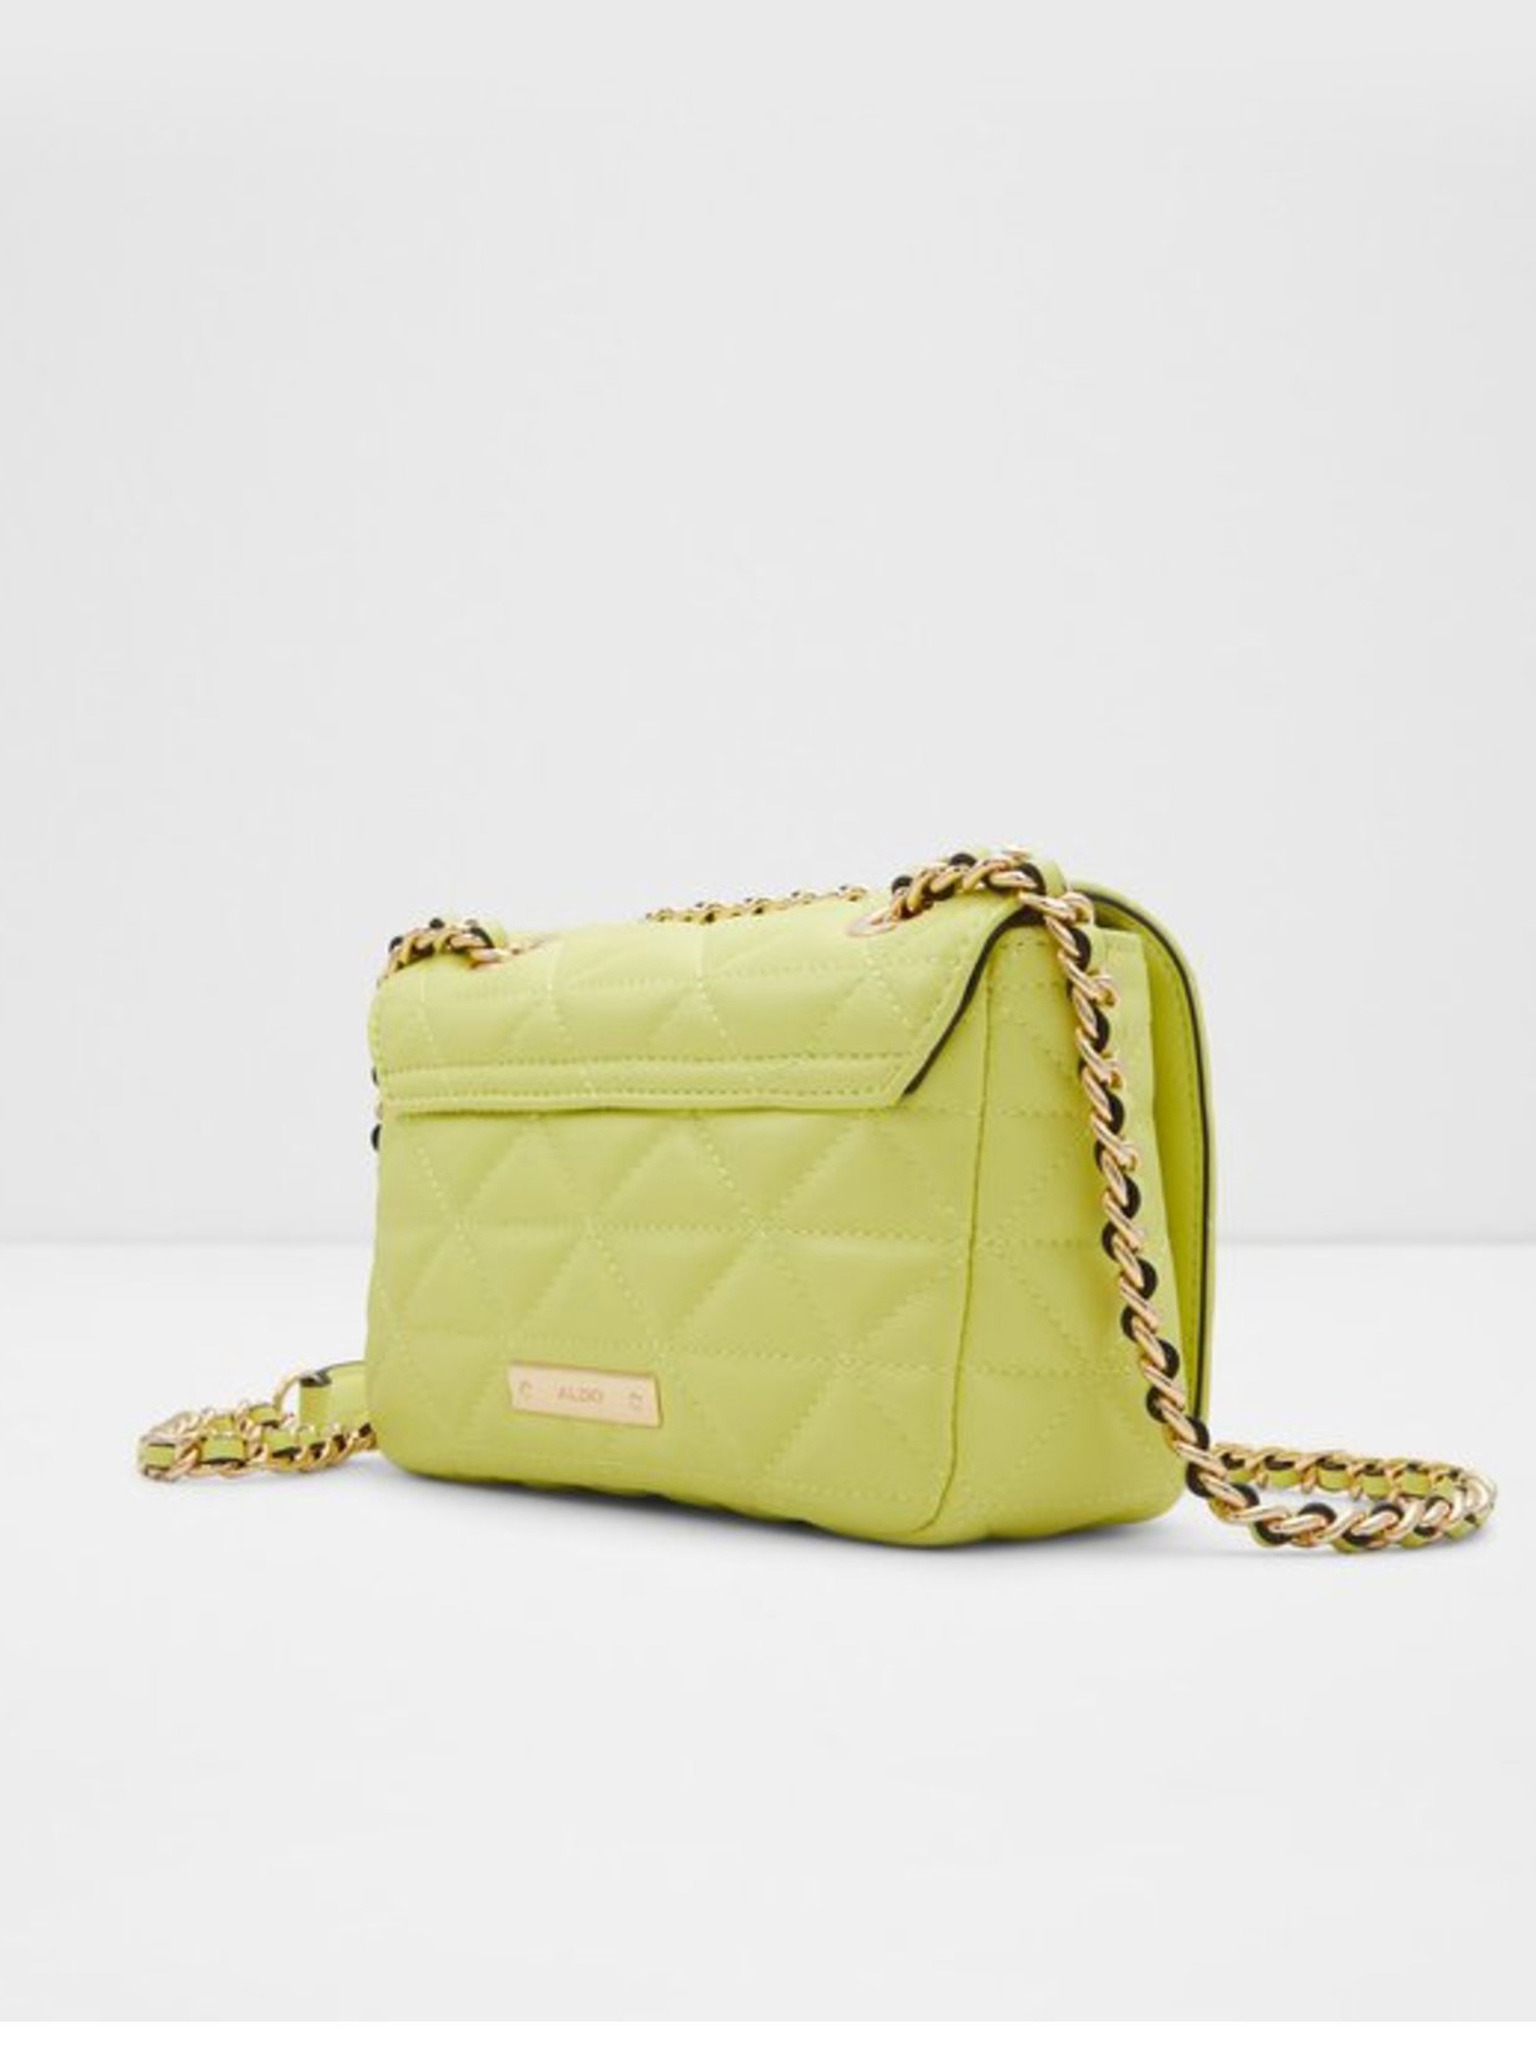 Aldo Medium Bags & Handbags for Women for sale | eBay